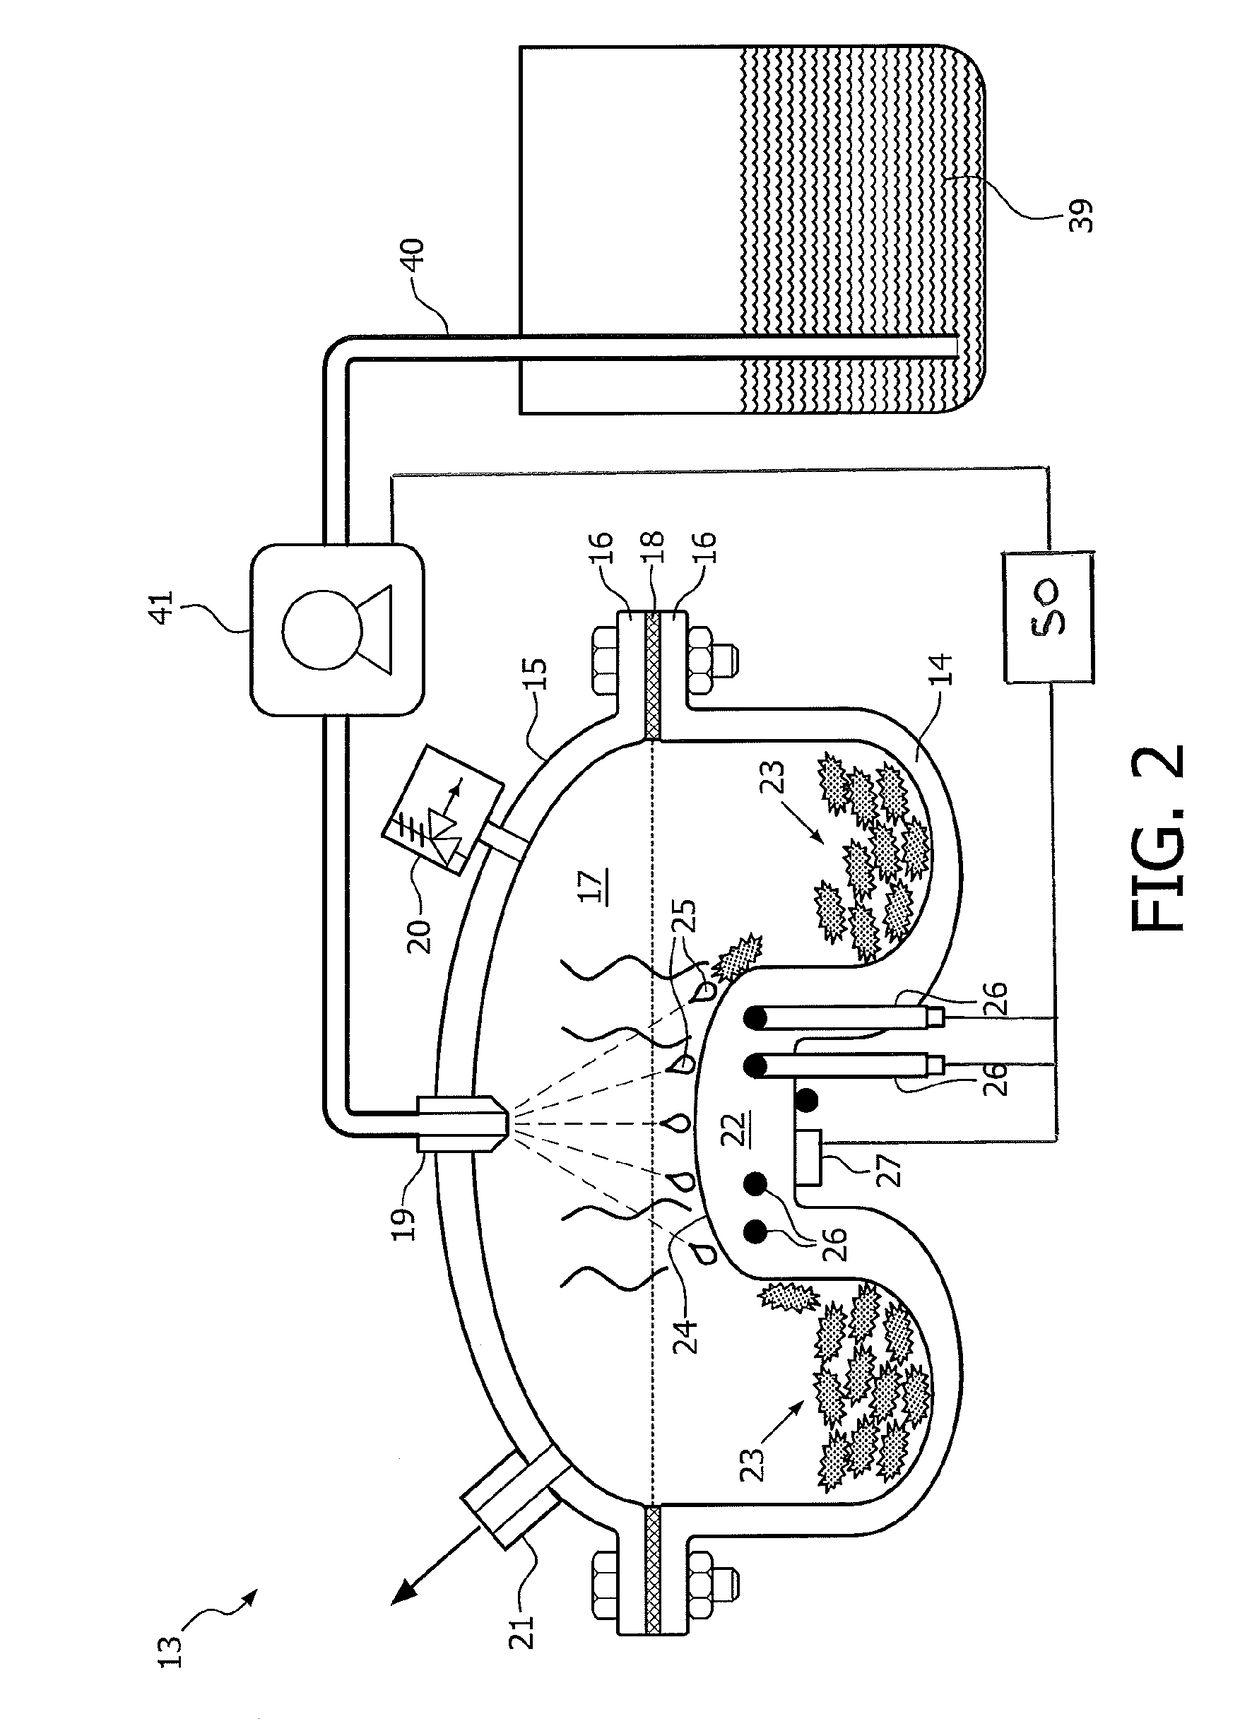 Apparatus for generating steam